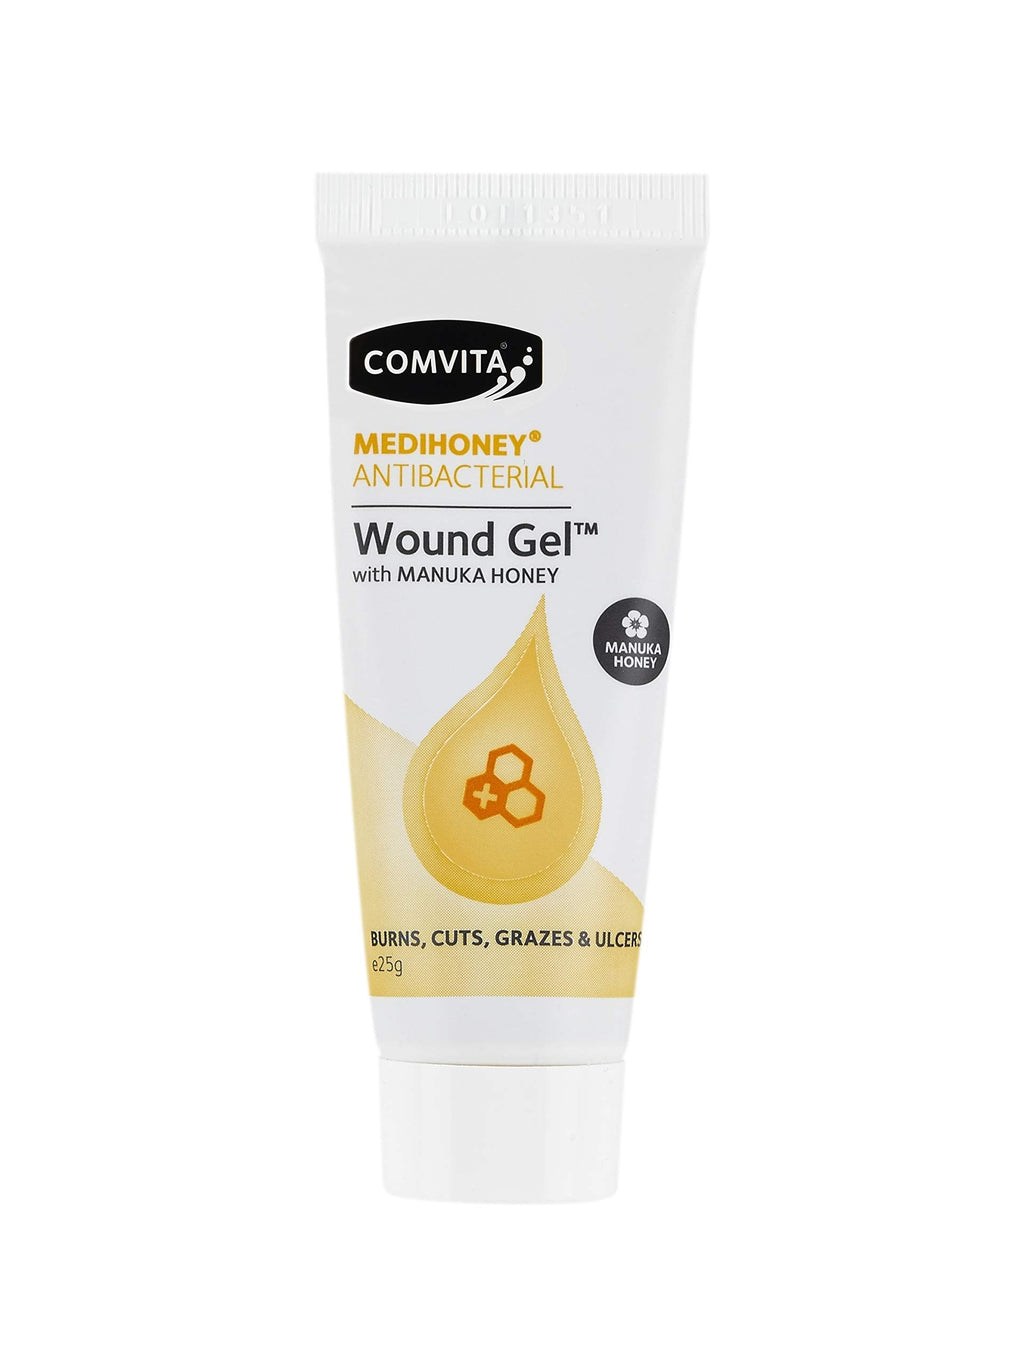 [Australia] - Comvita Medihoney Antibacterial Wound Gel with Manuka Honey (for Burns, Cuts, Grazes & Ezcema Wounds) - 25g 25 g (Pack of 1) 